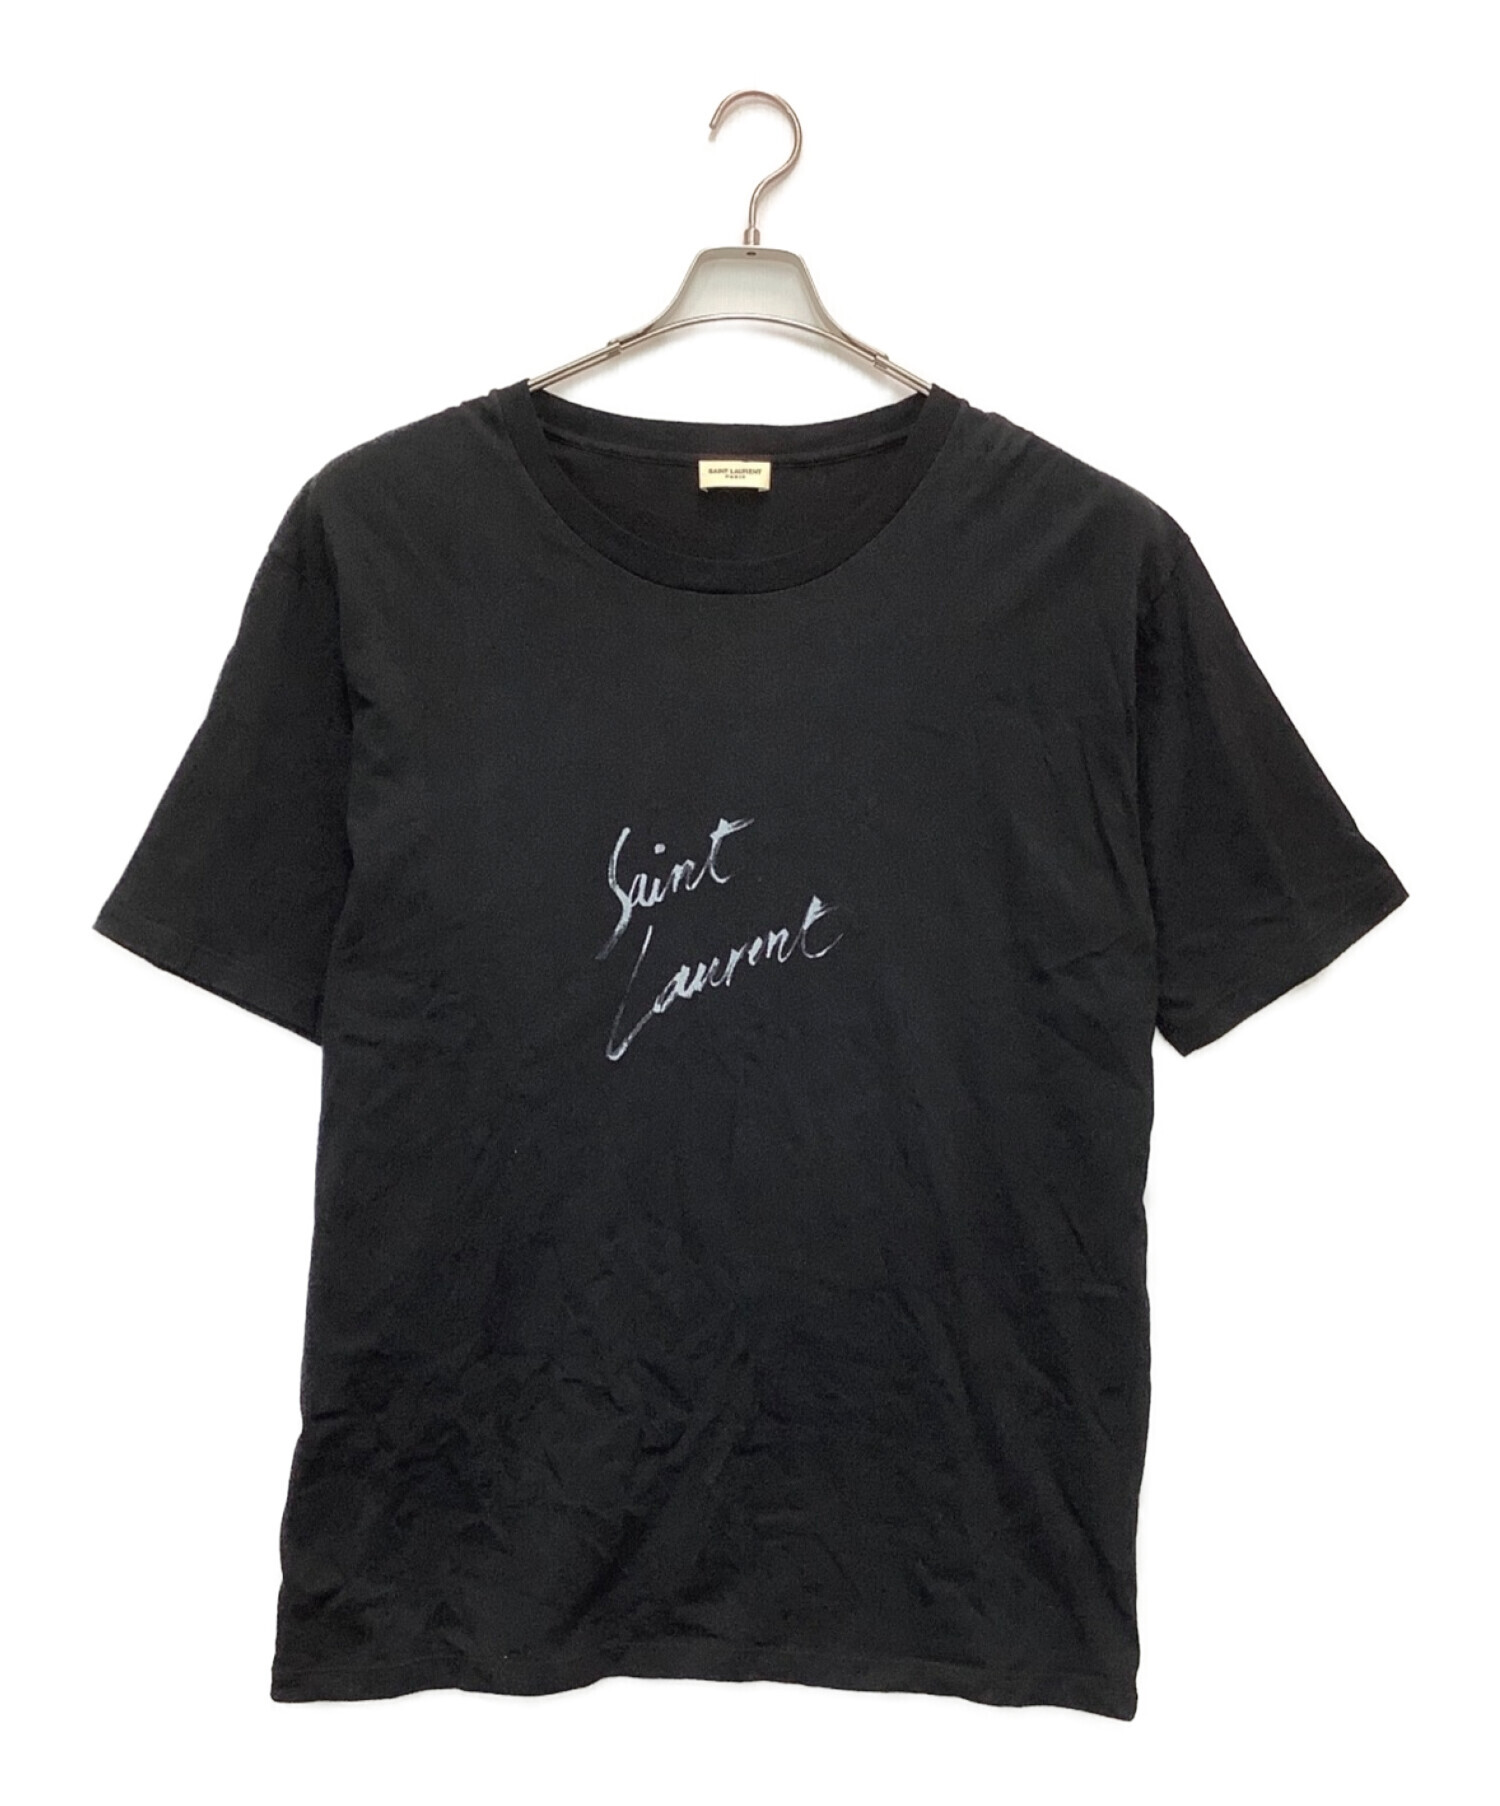 Saint Laurent Paris ロゴプリント Tシャツ